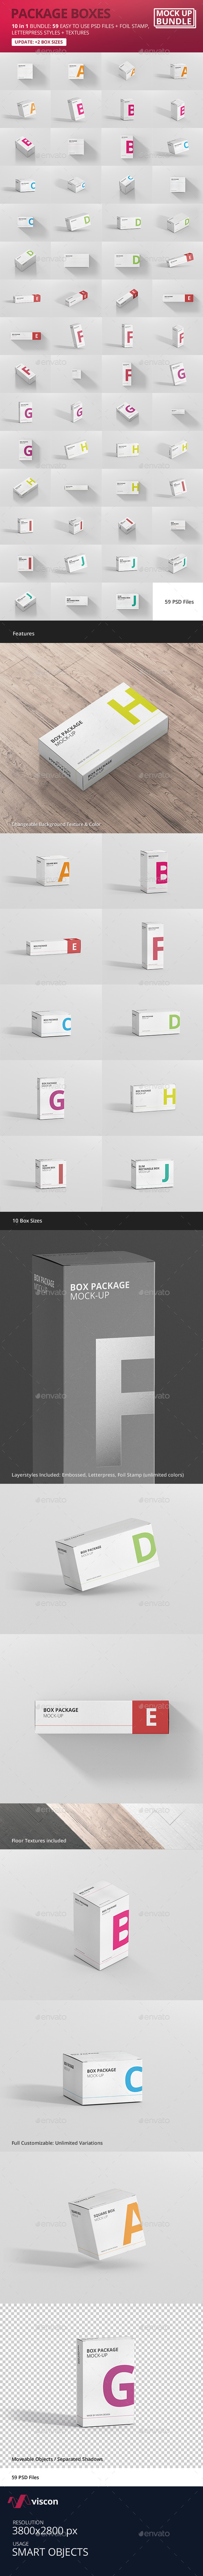 Download Package Box Mock Up Bundle By Visconbiz Graphicriver PSD Mockup Templates